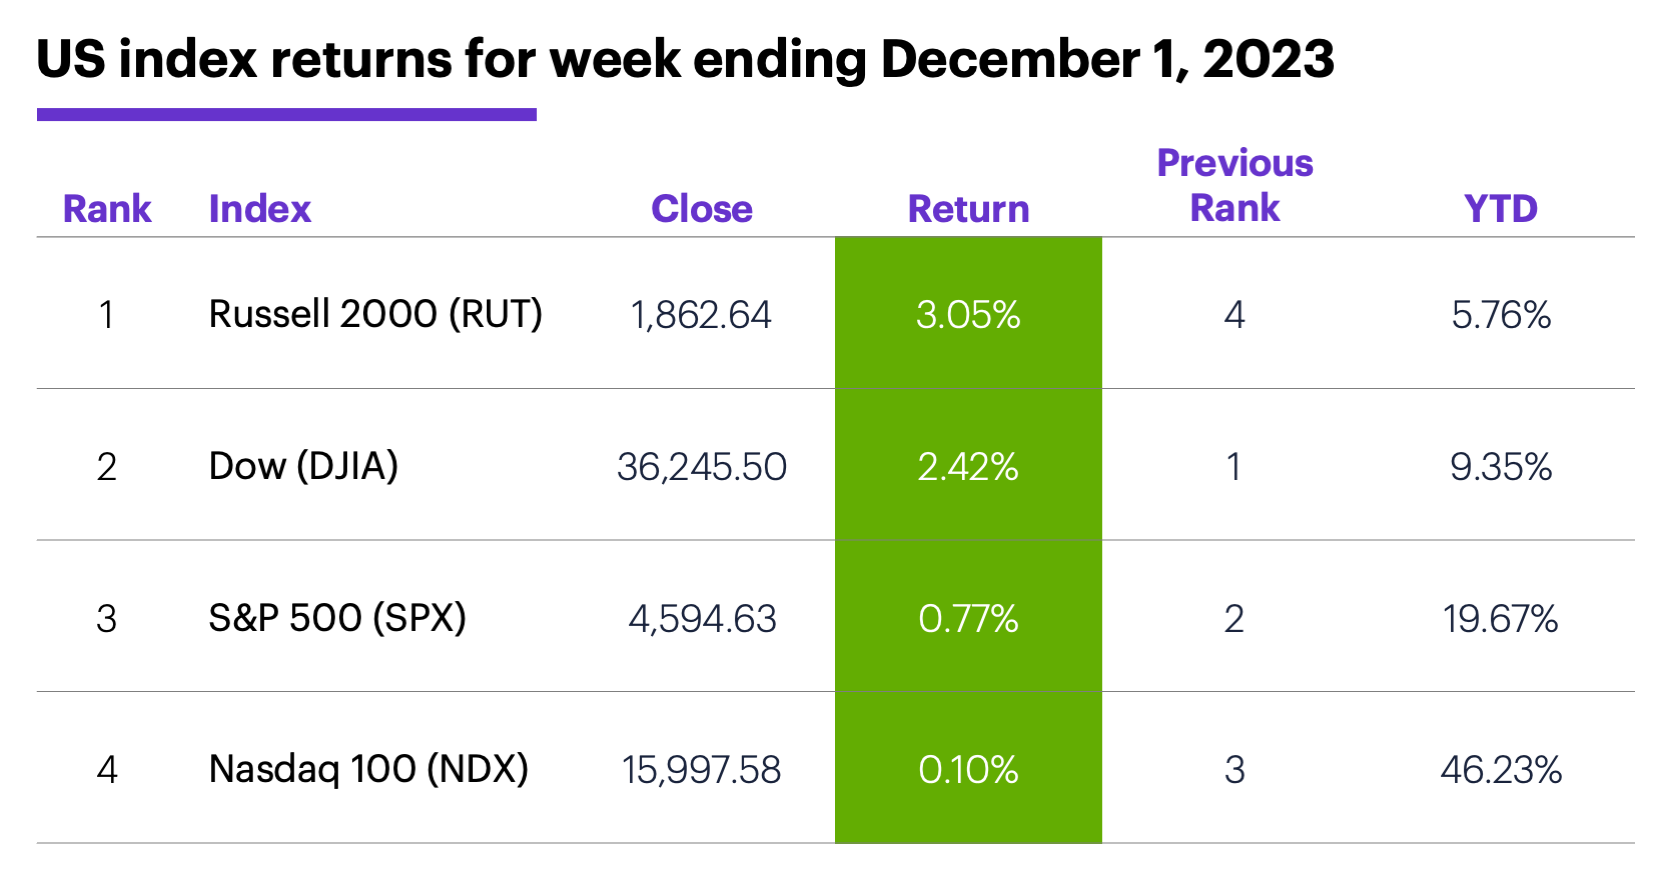 US stock index performance for week ending 12/1/23. S&P 500 (SPX), Nasdaq 100 (NDX), Russell 2000 (RUT), Dow Jones Industrial Average (DJIA).